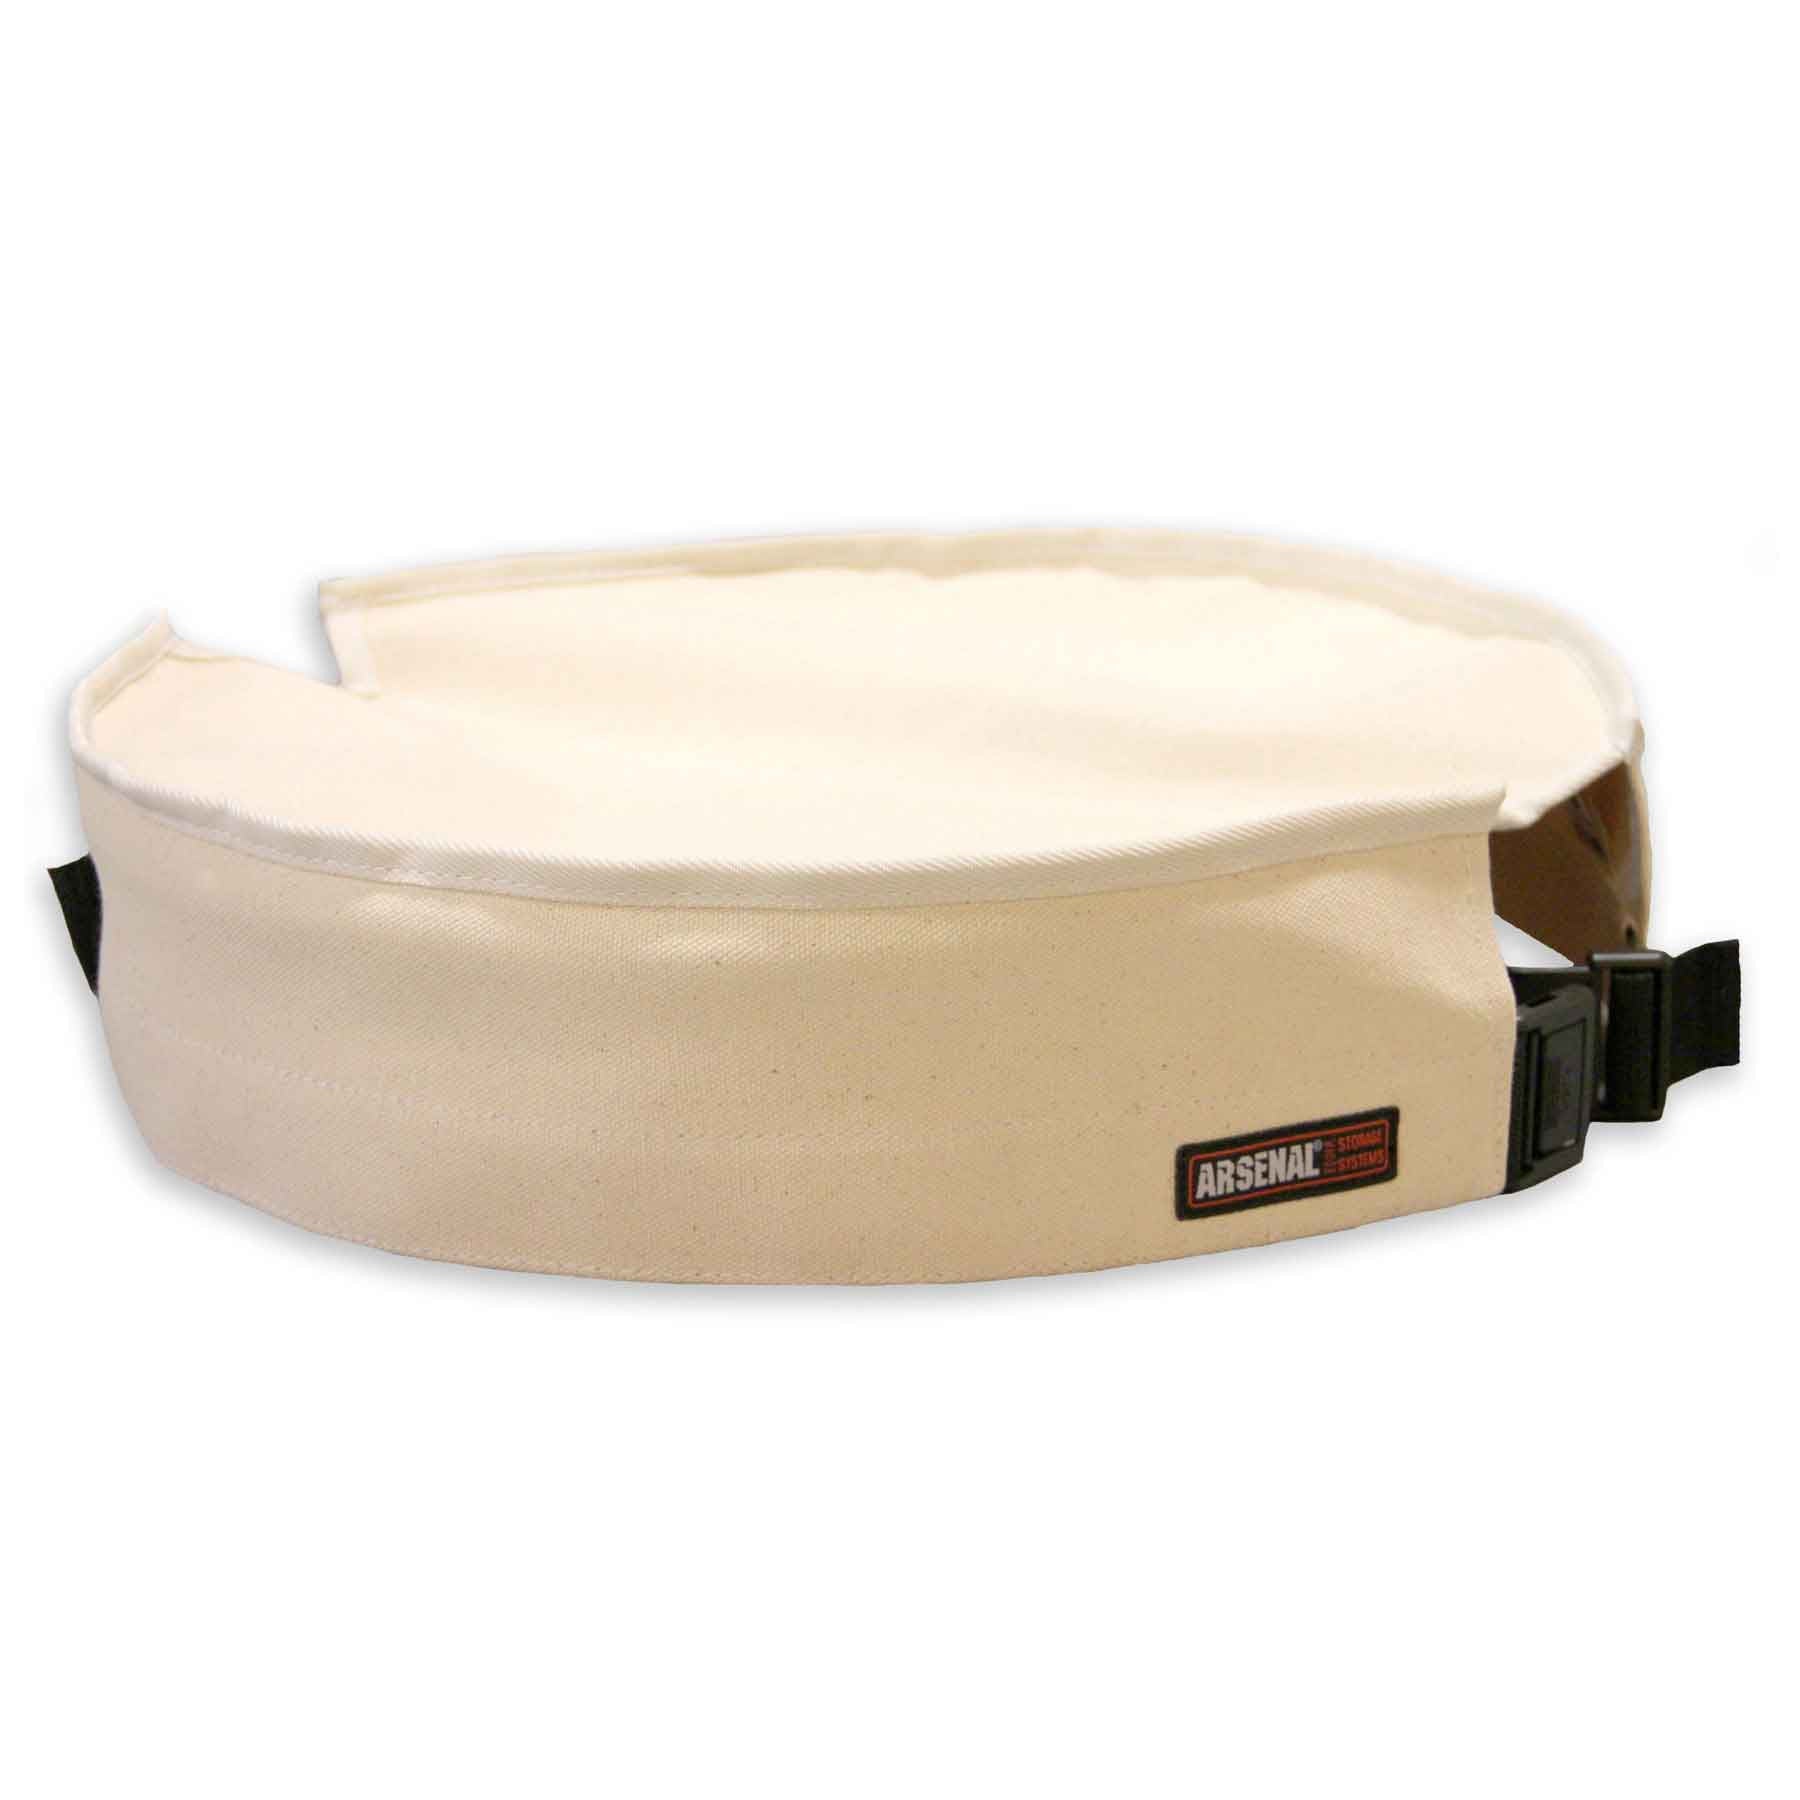 Arsenal 5737 XL Canvas Bucket Safety Top-eSafety Supplies, Inc